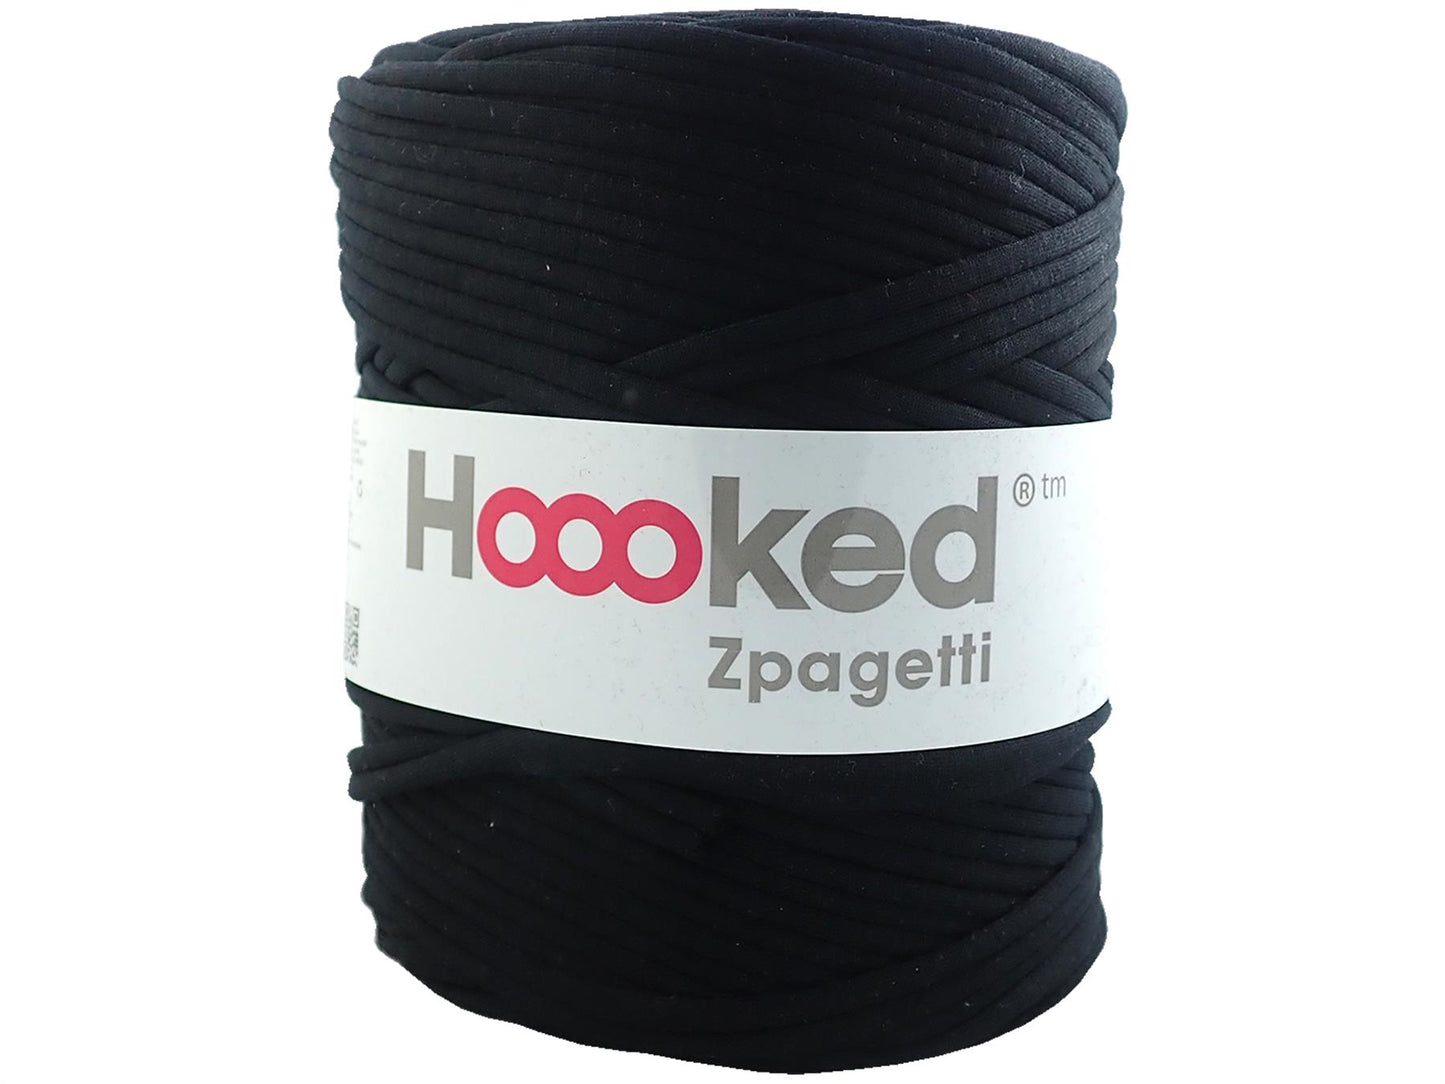 Hoooked Zpagetti Black Cotton T-Shirt Yarn - 120M 700g